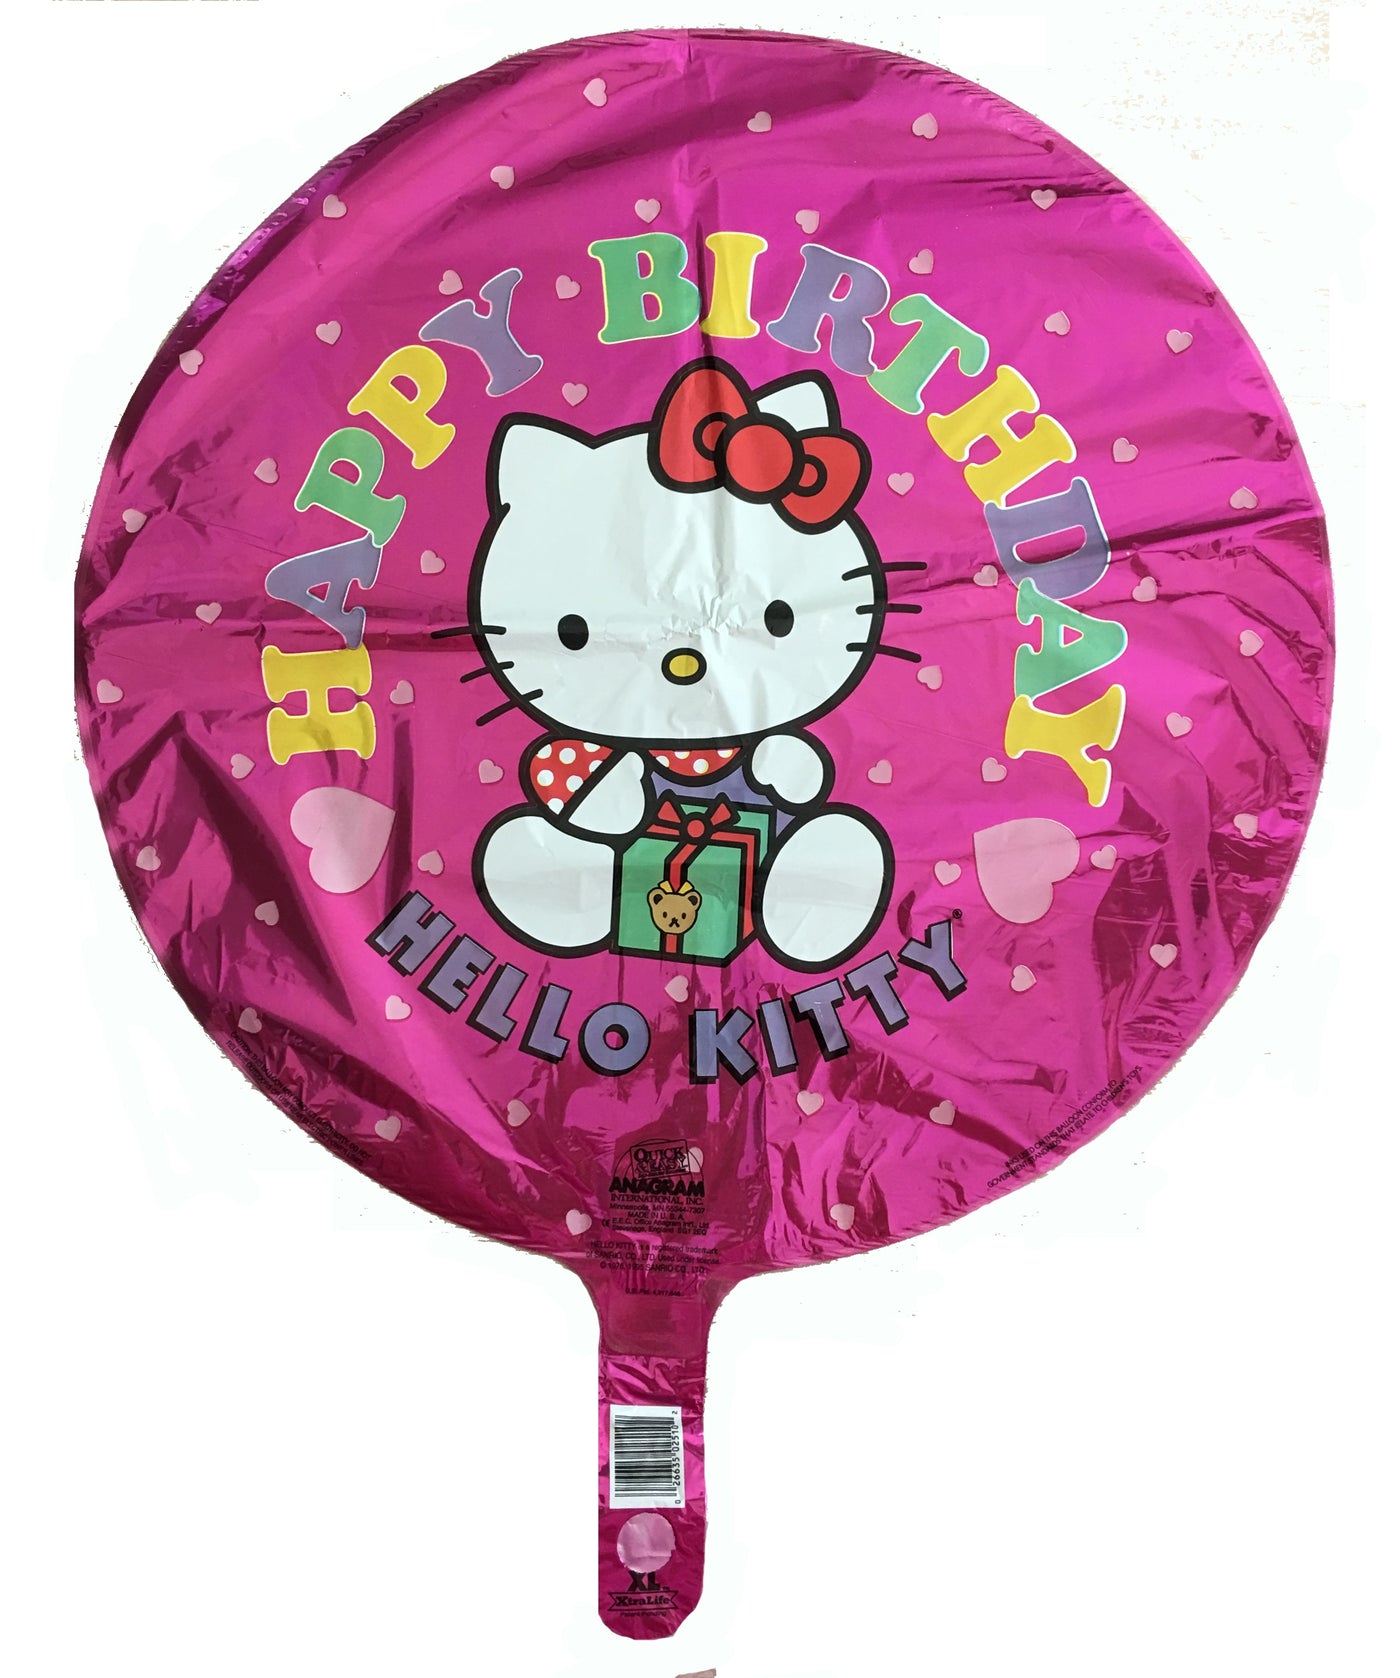 10 Baby Shower White/ Pink Hot Pink Balloon Newborn Party